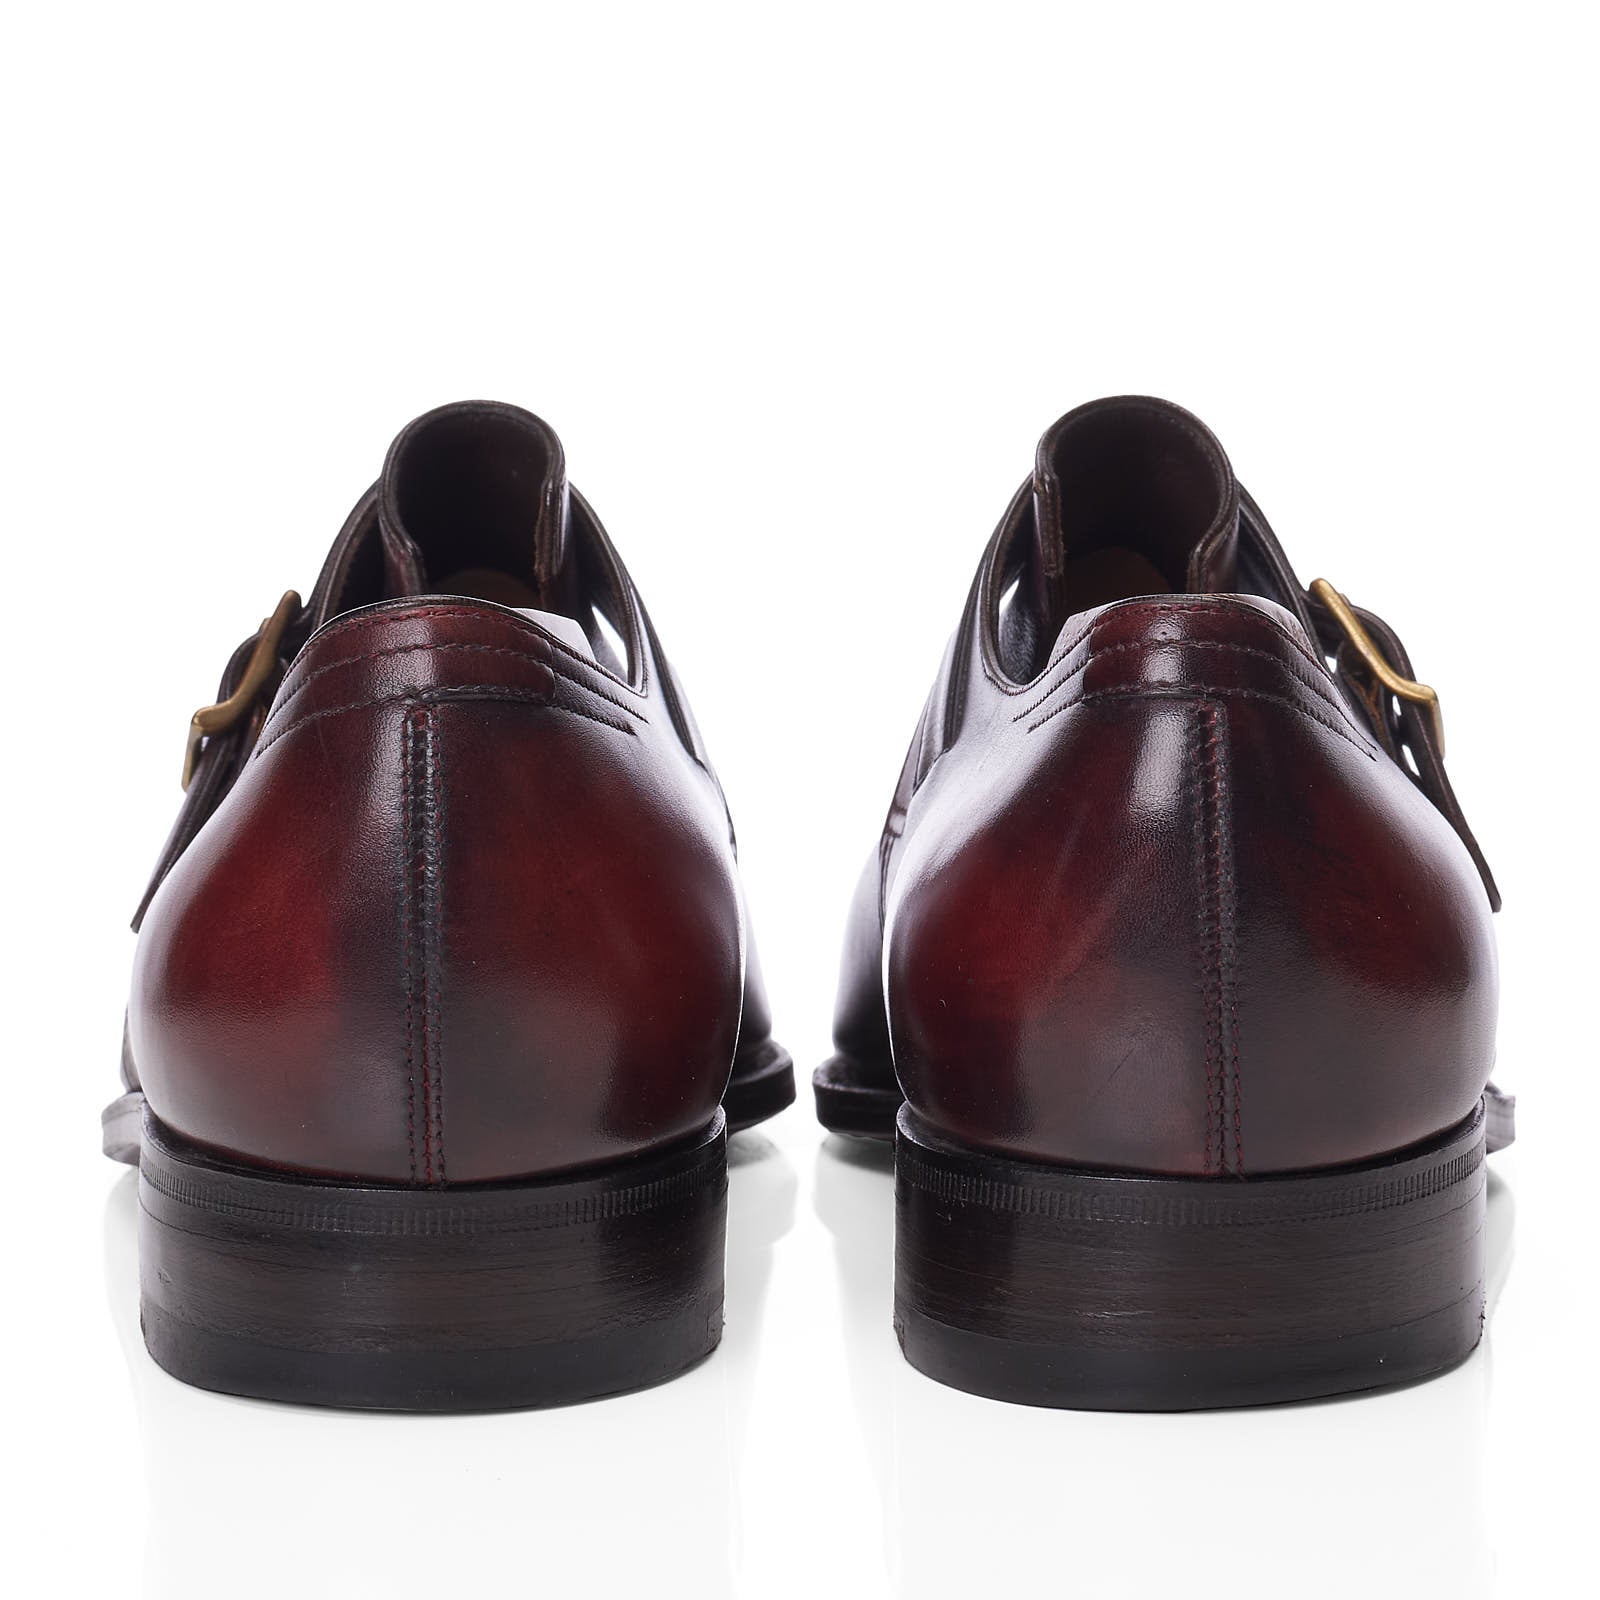 CORTHAY Paris "Arca Buckle" Burgundy Calf Leather Single Monk Dress Shoes Size 7.5